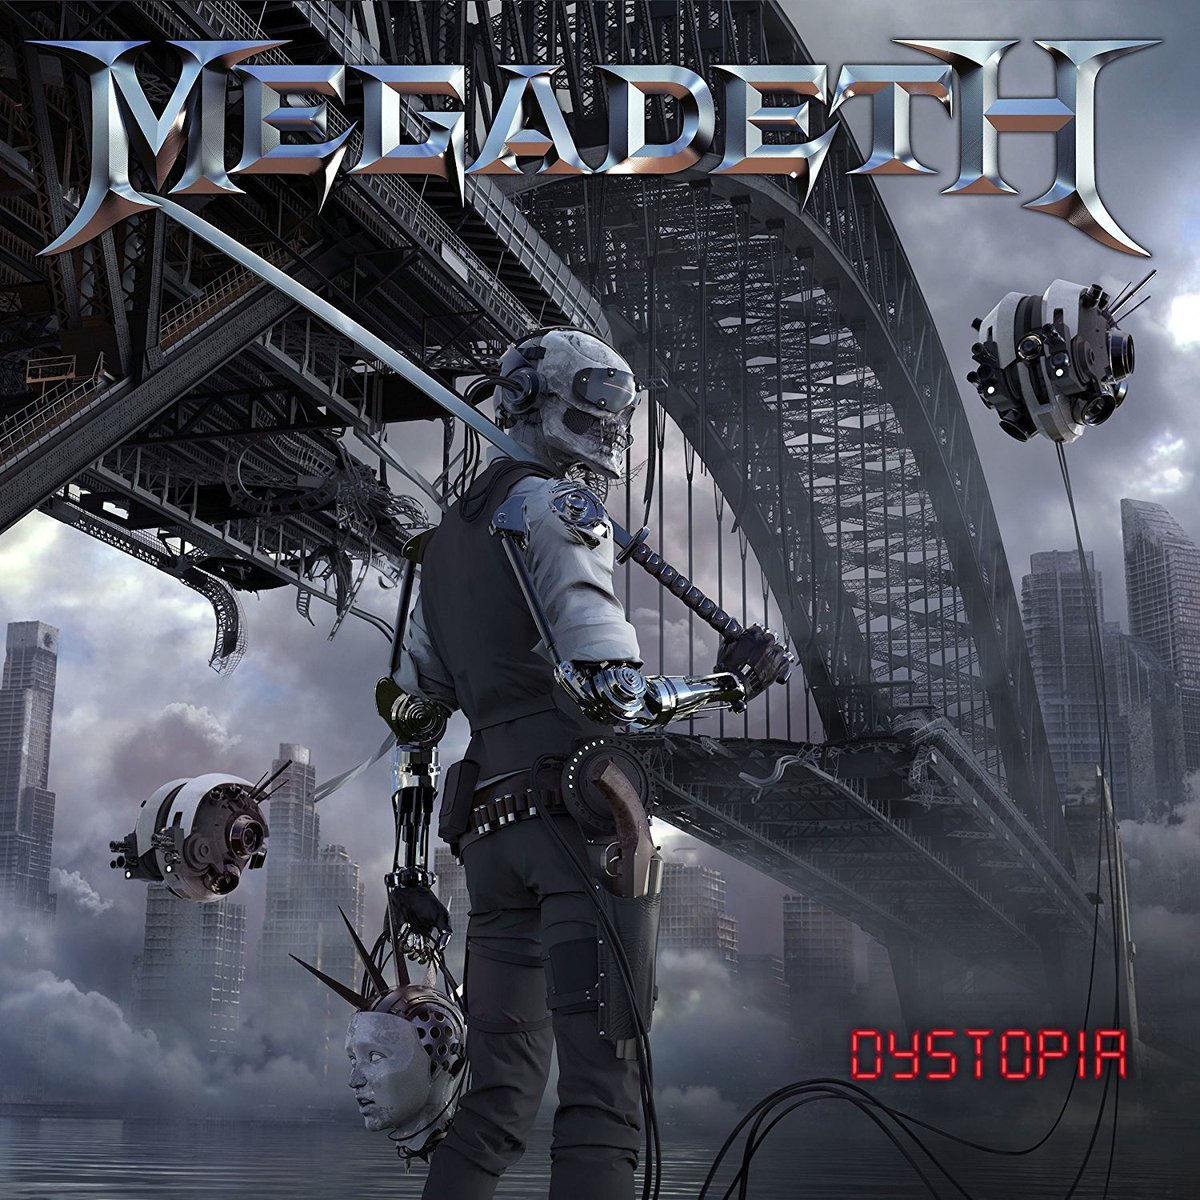 #NowPlaying the #latest #fantastic #album #Dystopia by @Megadeth on the #Sunday #Music #Marathon 

#Megadeth #HeavyMetal #Metal #Thrash #ThrashMetal #MetalMusic #Metalheads #Metalhead #MetalheadsForever #MHF #Magazine #WorldMetalDomination #USA #Big4